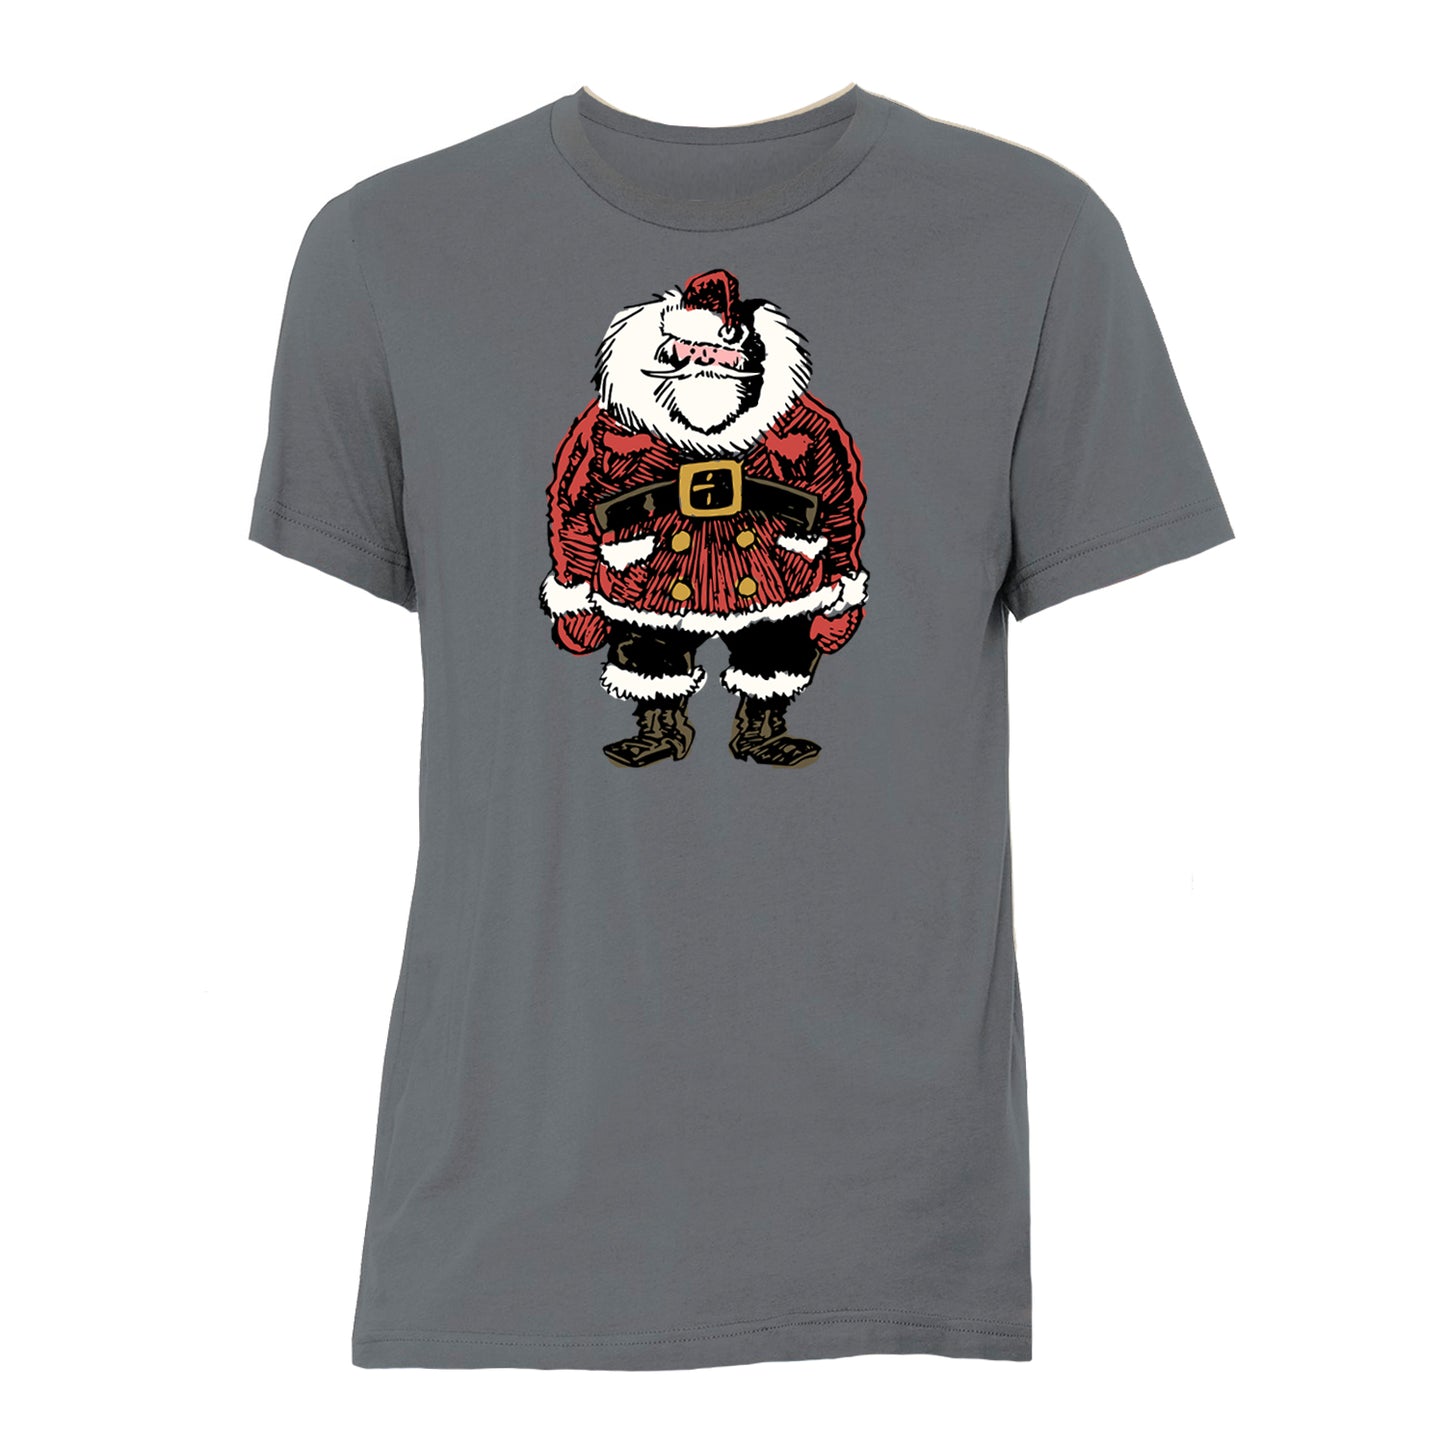 "Here We Go Again, Santa" - Sweatshirt OR T-shirt